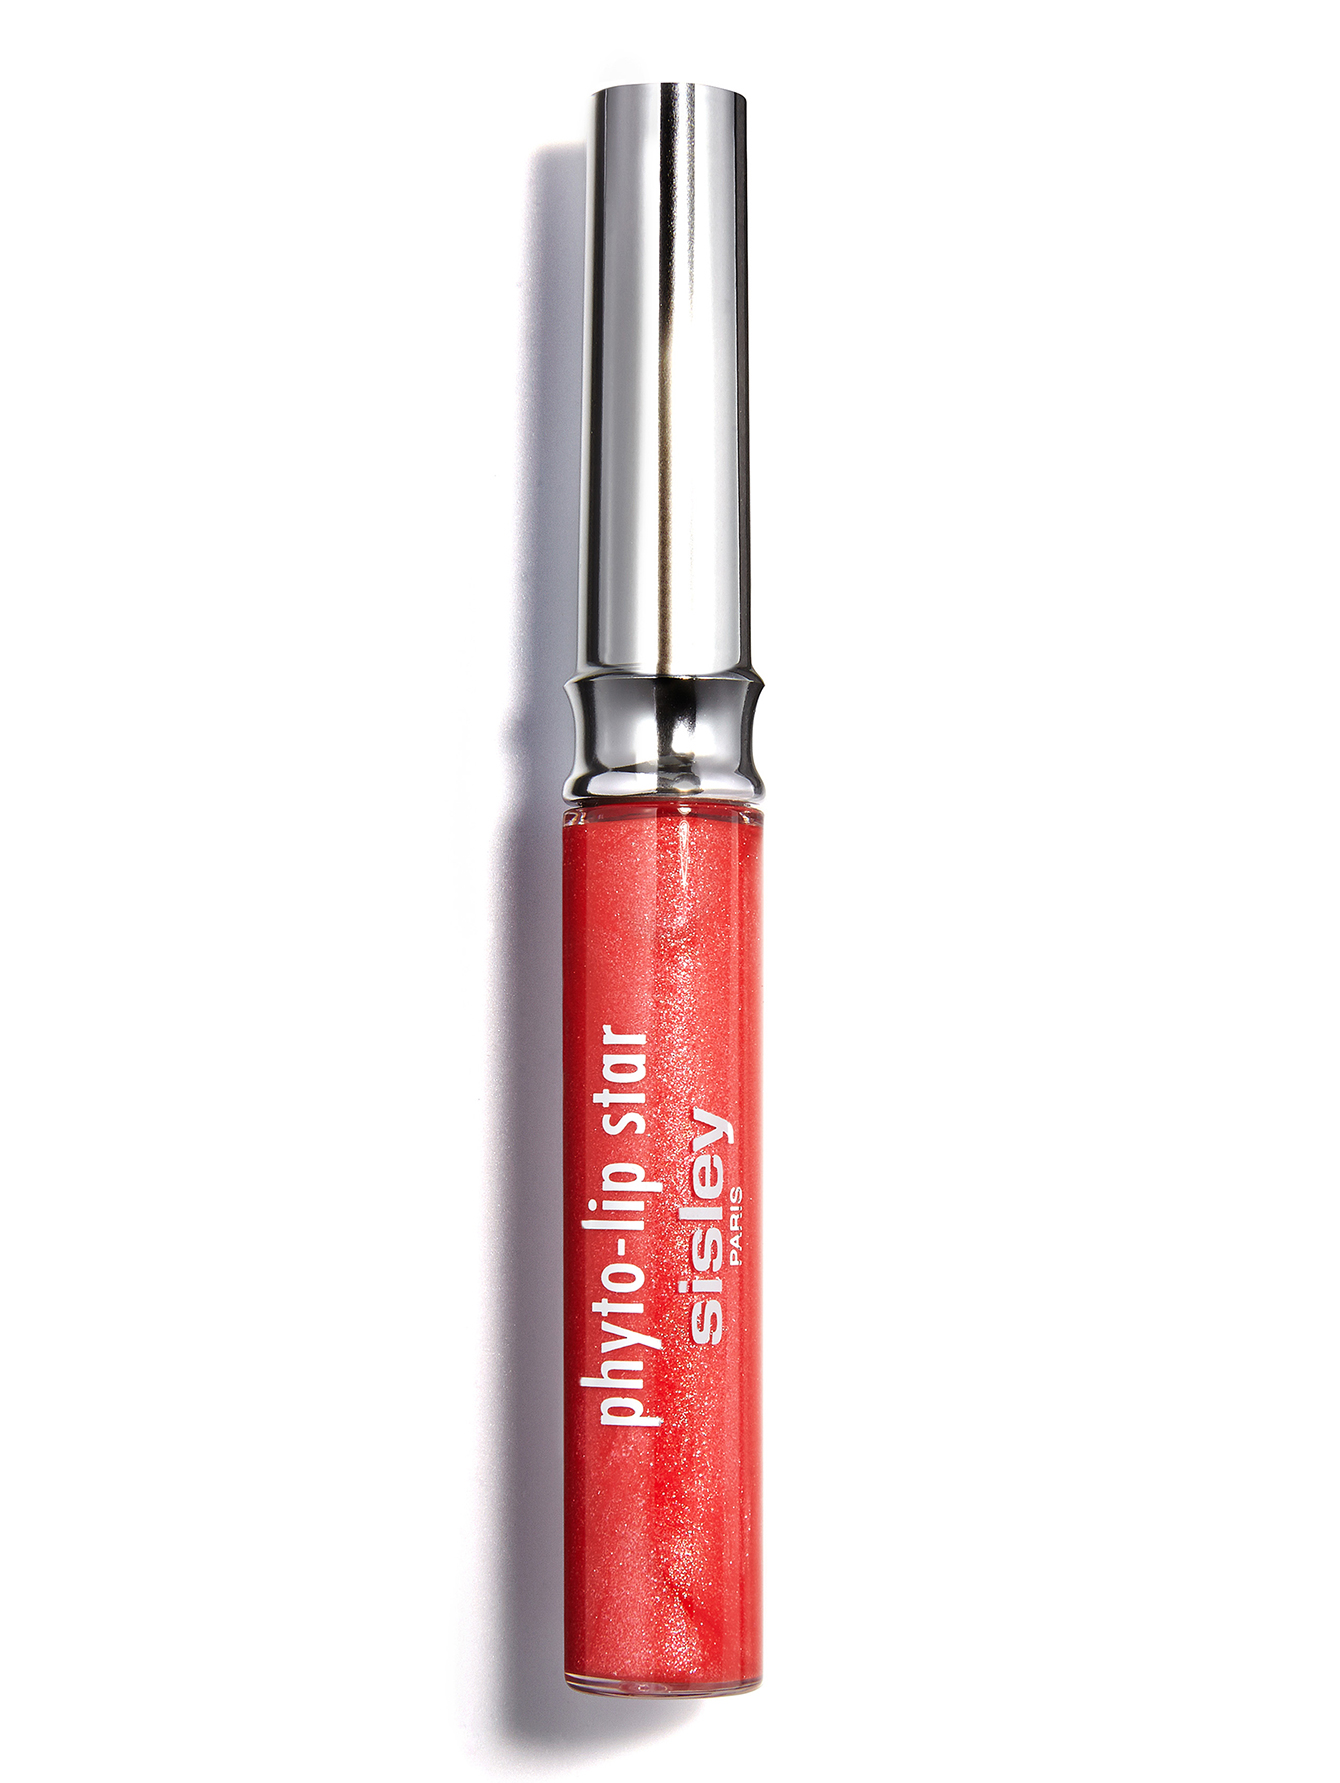 Блеск для губ - №5 Shiny Ruby,Phyto lip Star - Общий вид